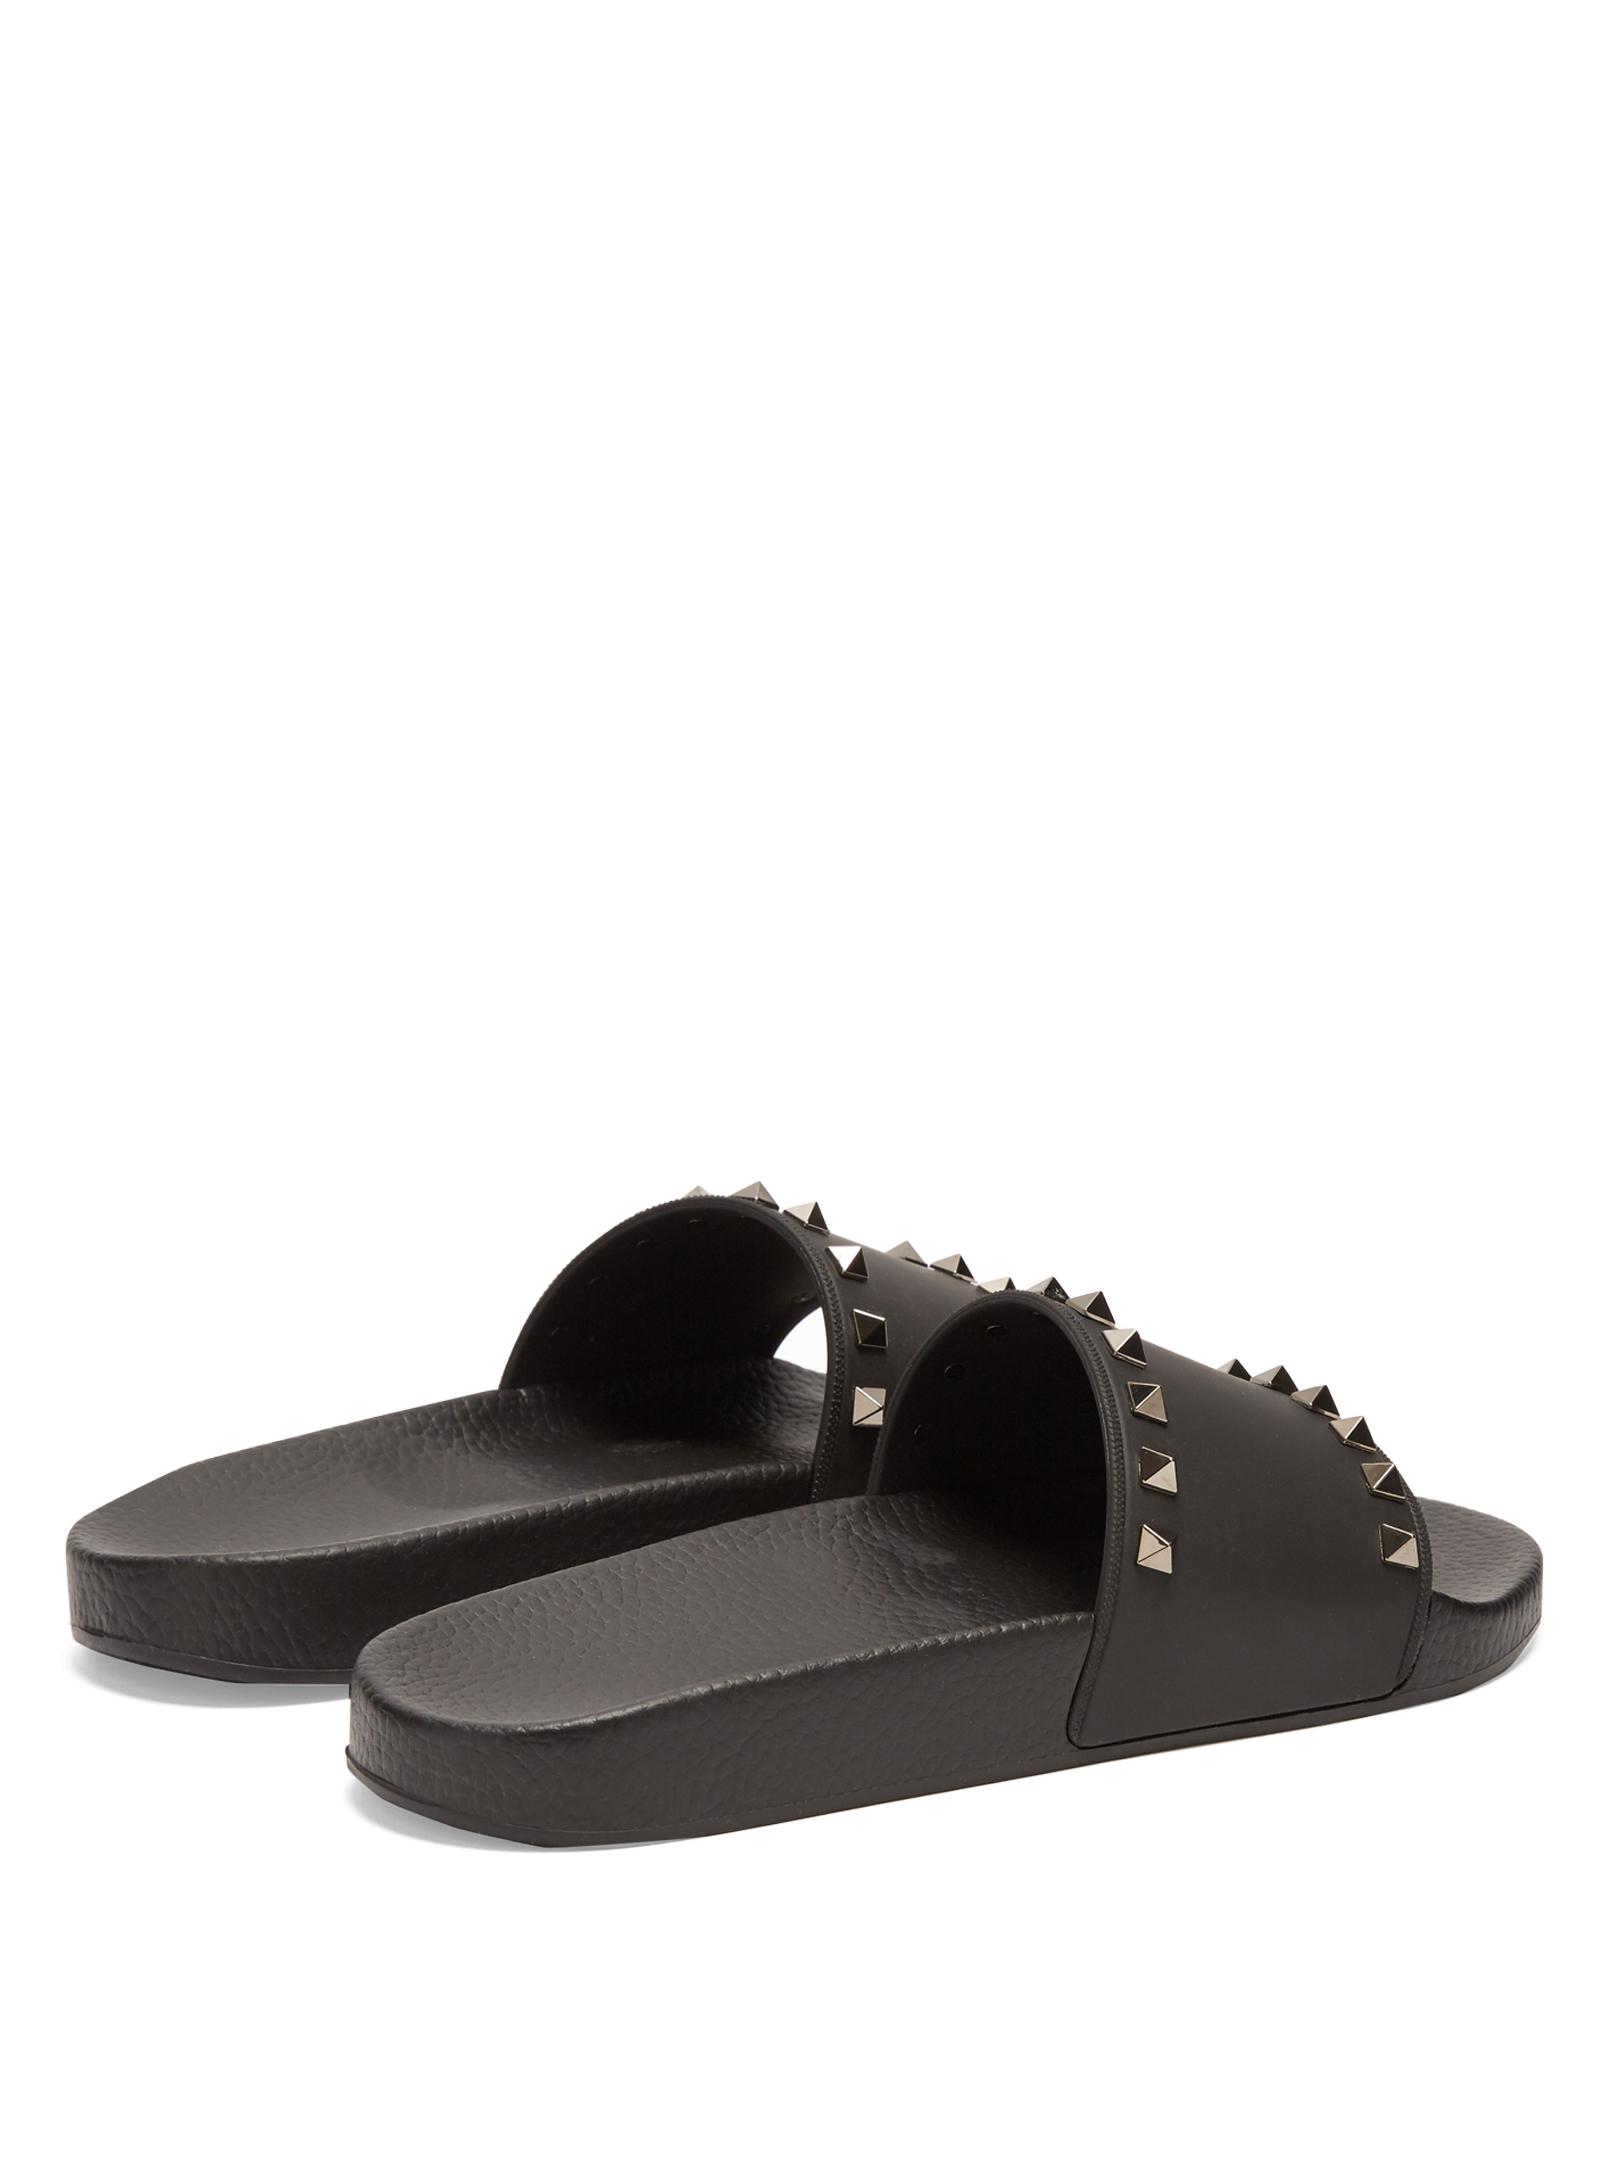 Valentino Rockstud Rubber Slide Sandal in Black - Lyst